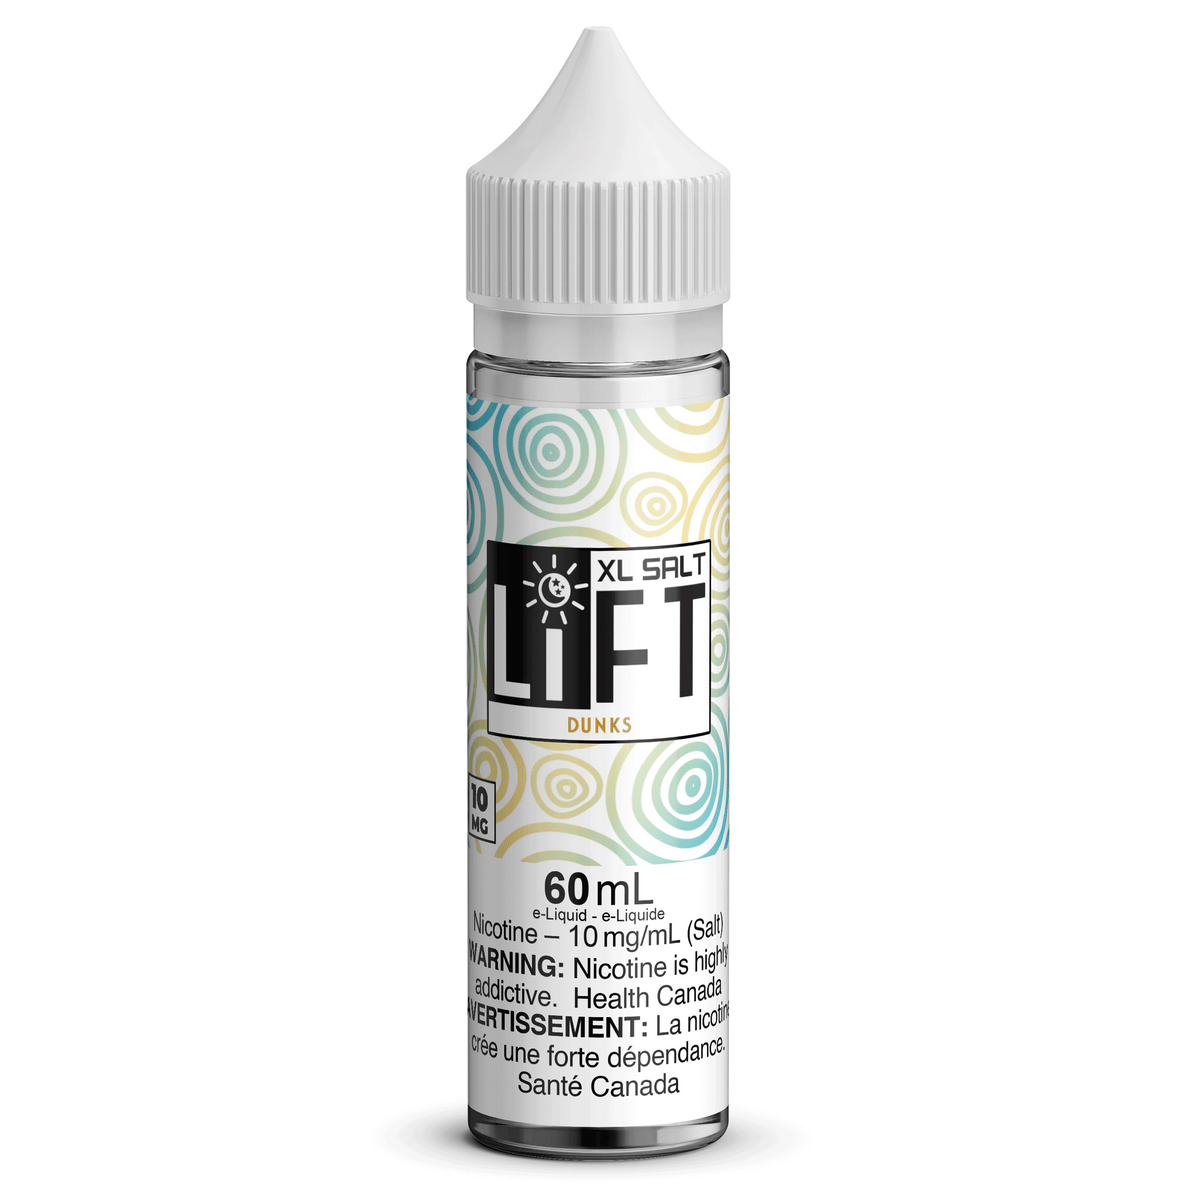 LIFT XL SALT - Dunks available on Canada online vape shop